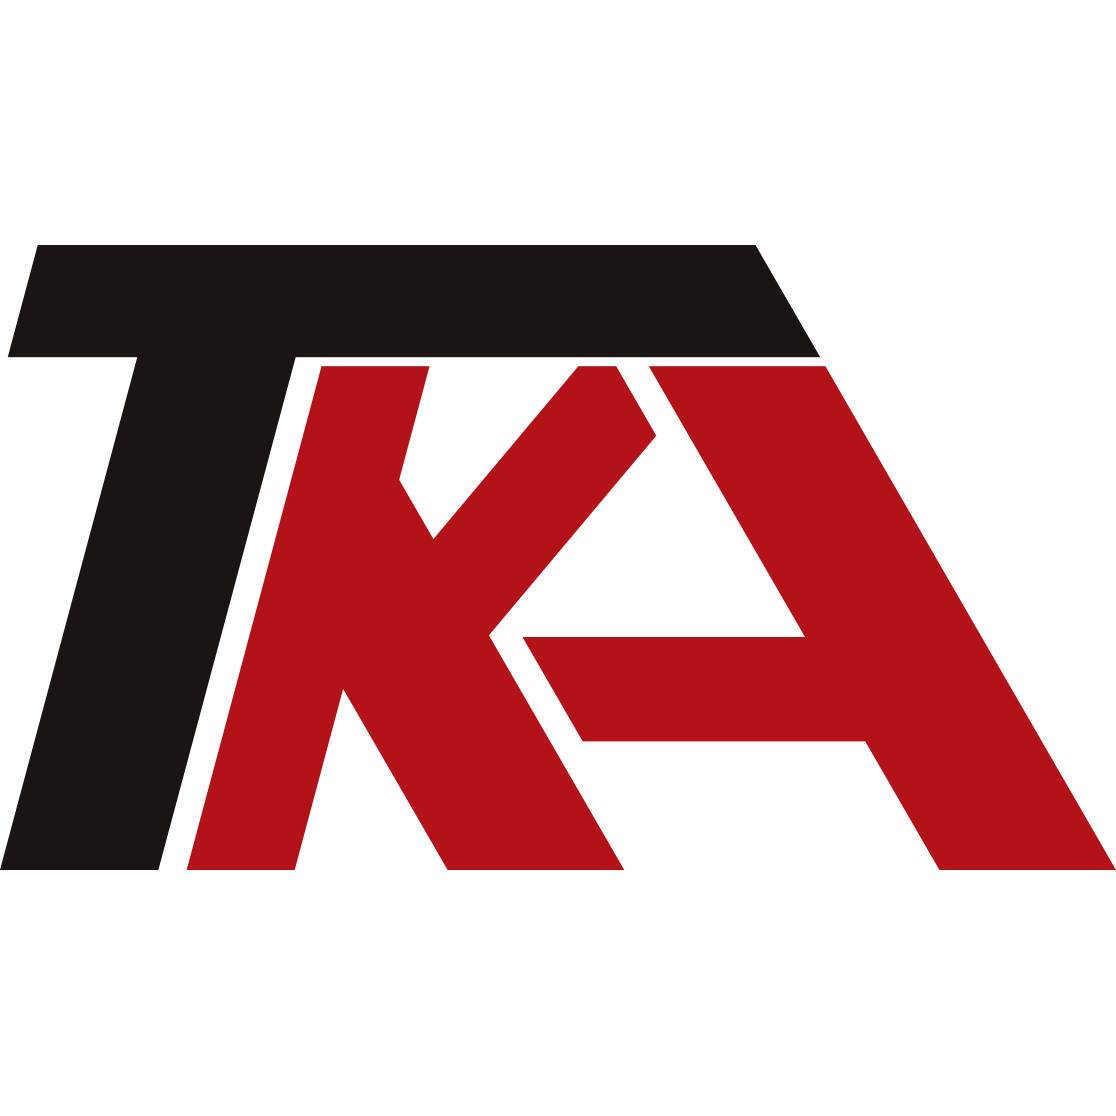 TKA Logo - TKA E Sports. League Of Legends Esports